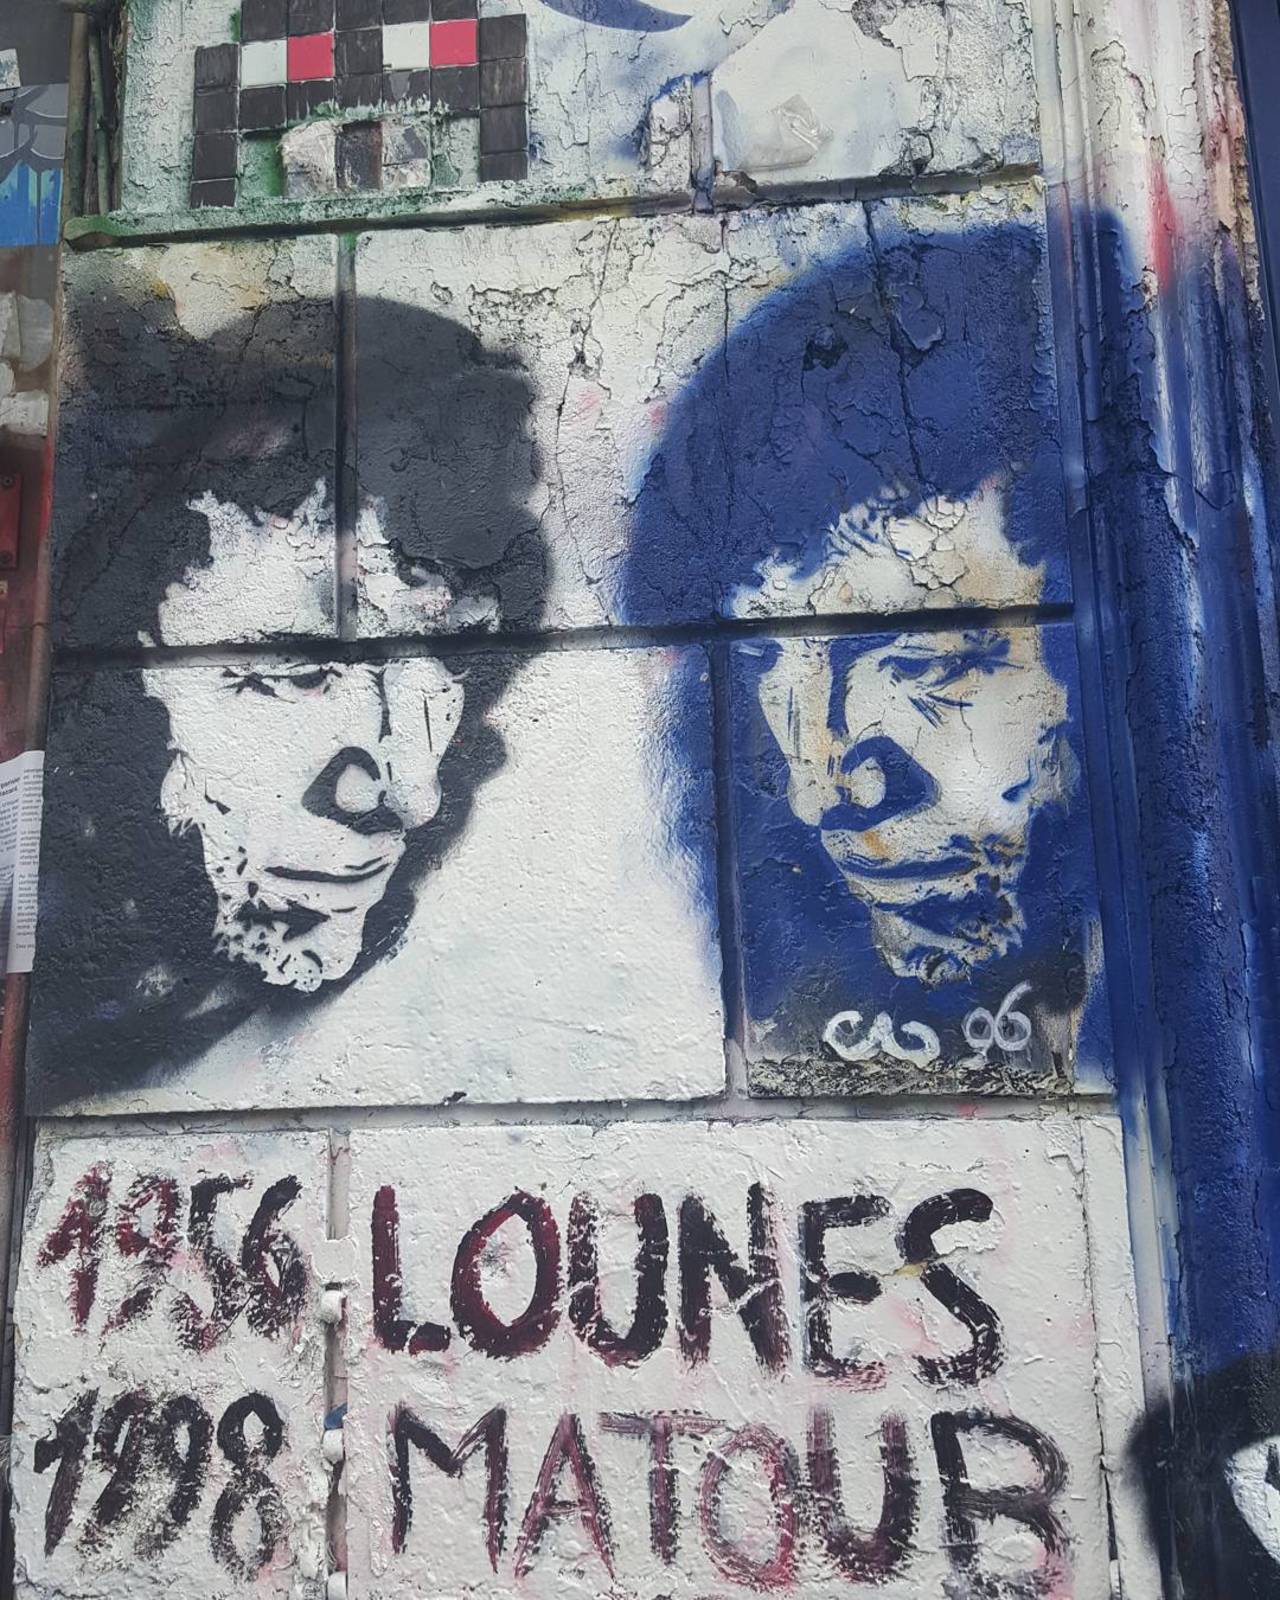 #Paris #graffiti photo by @jdewey67 http://ift.tt/1jlnlds #StreetArt http://t.co/11o2syEoNm